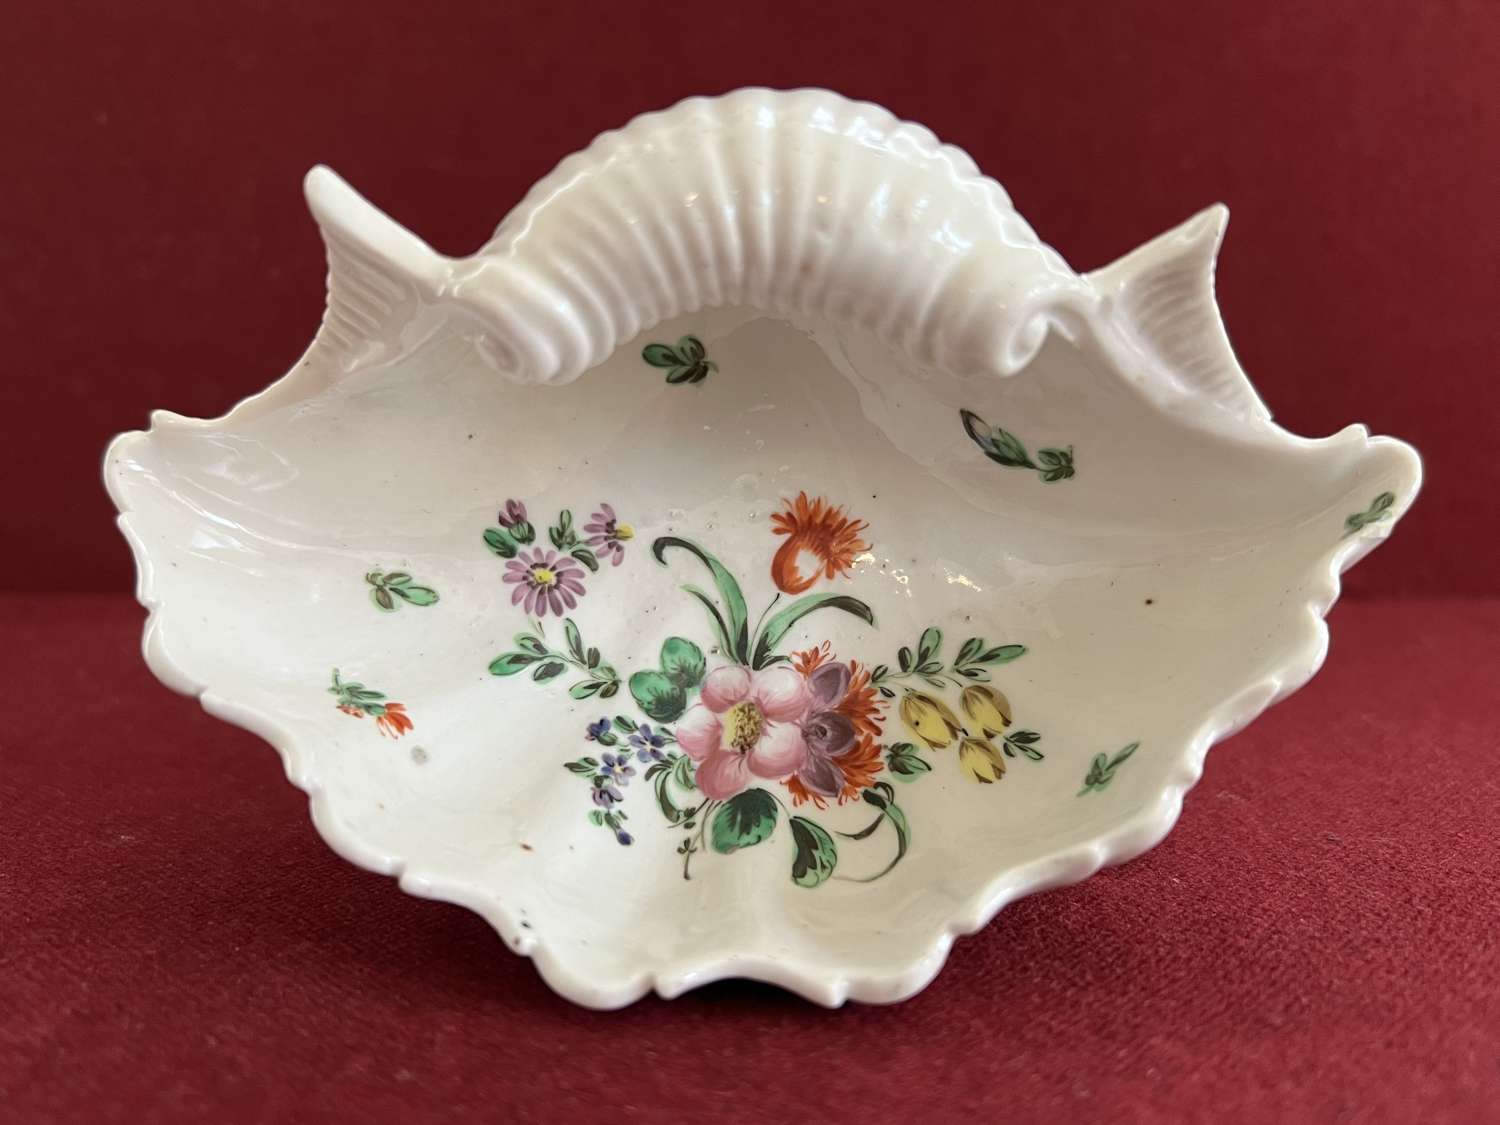 A rare Bristol Porcelain Shell Salt c.1772-1774